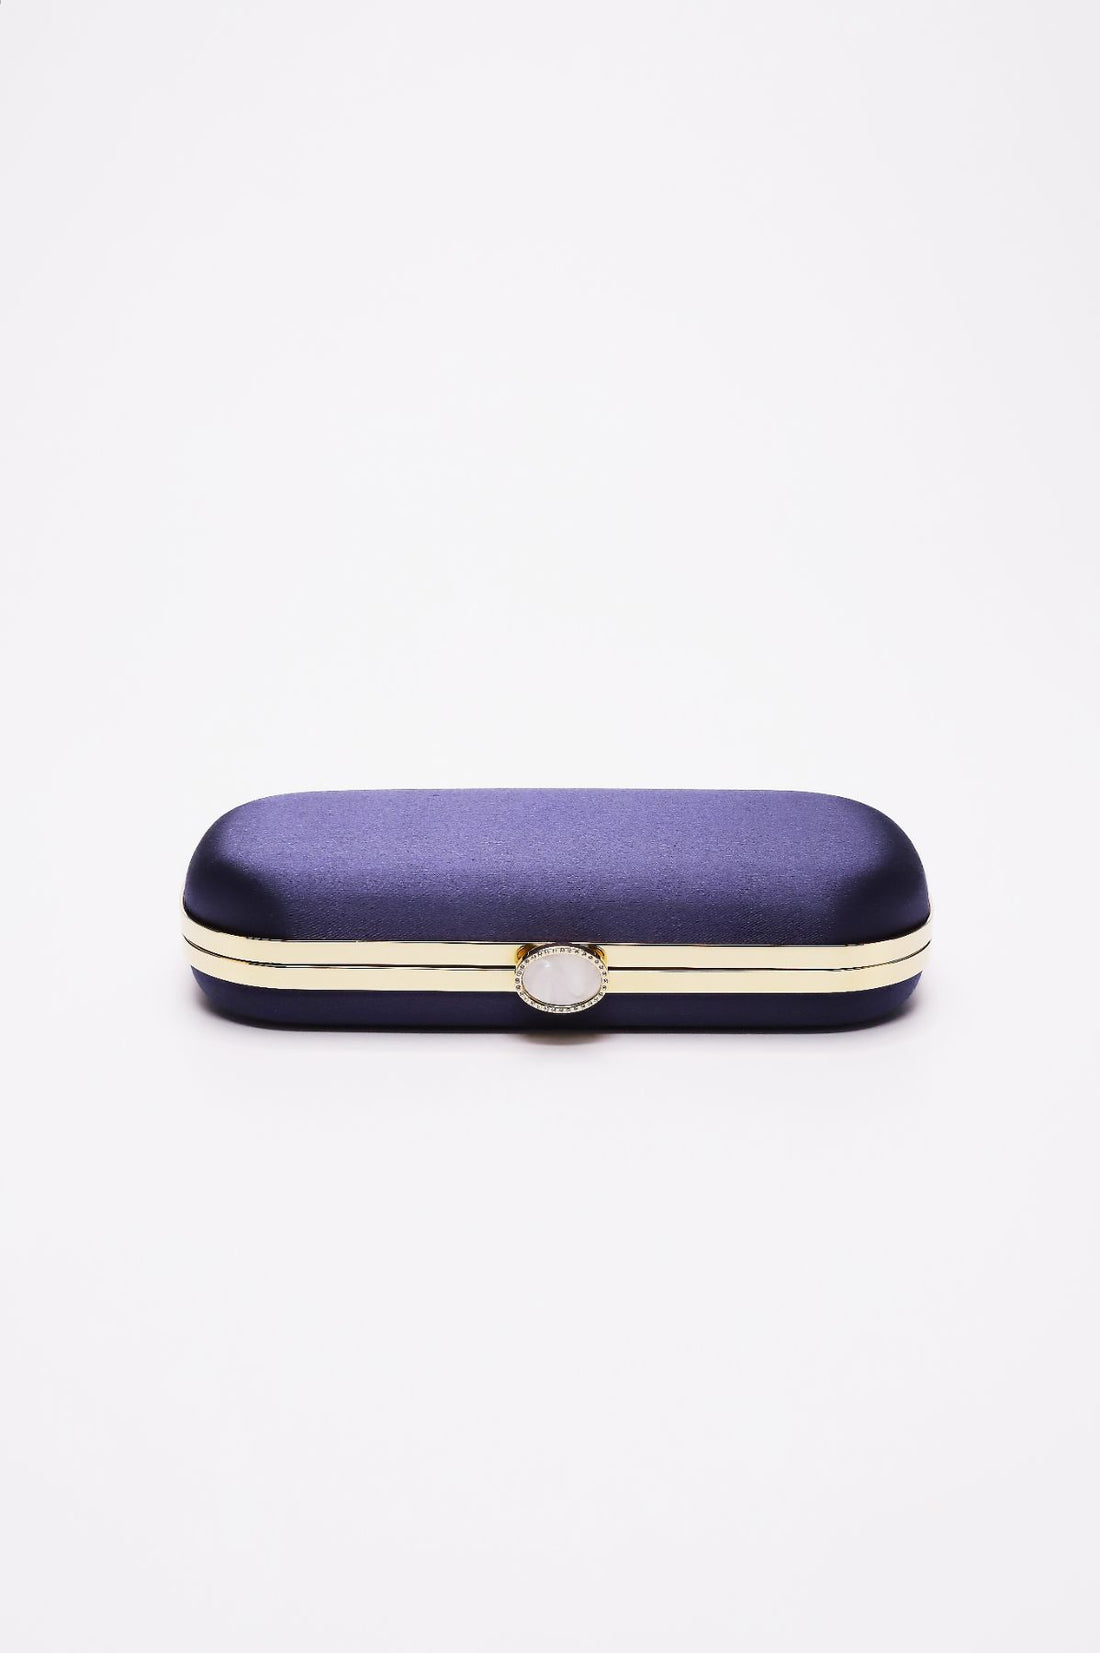 Vintage velvet clutch, Purple bag, Velvet purse, Handmade clutch